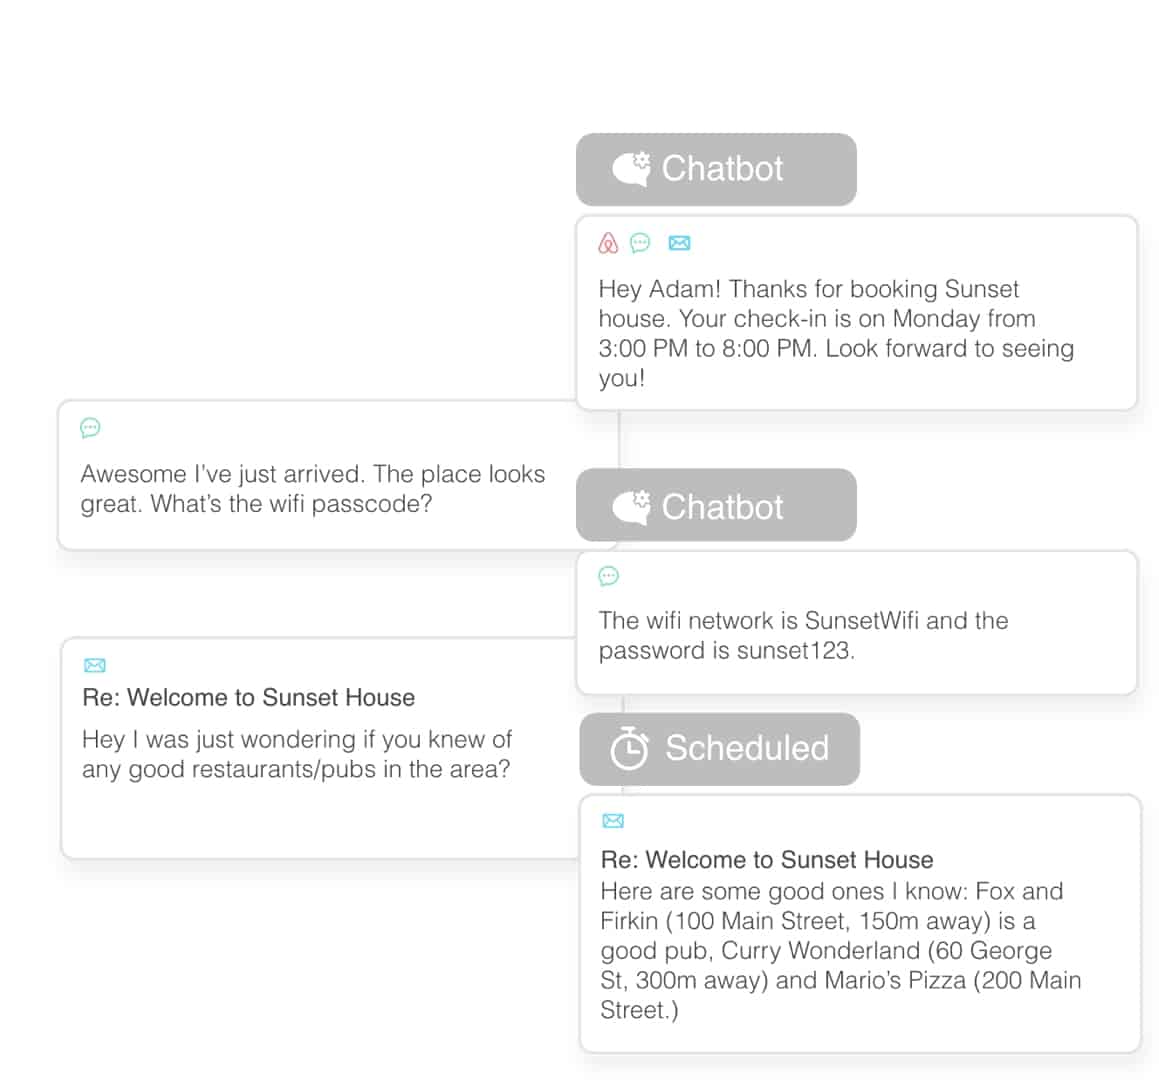 Enso Connect's Smart AI chat assistant